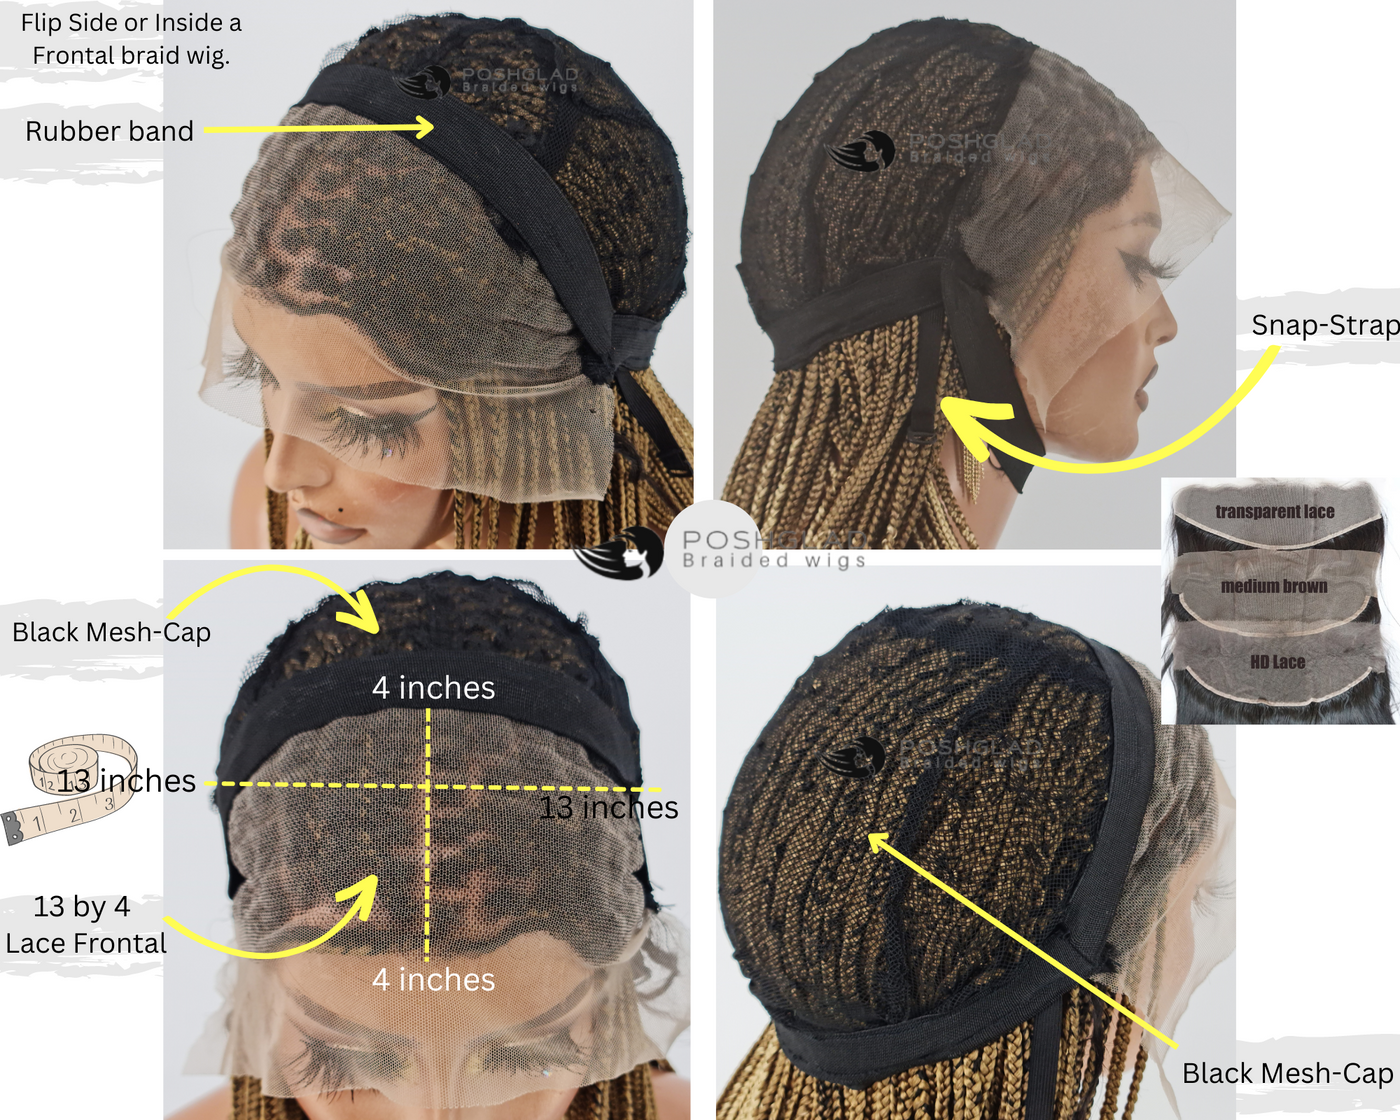 Cornrow Braid Wig - 13x4 Lace Frontal - Olamide Poshglad Braided Wigs Cornrow Braid Wig